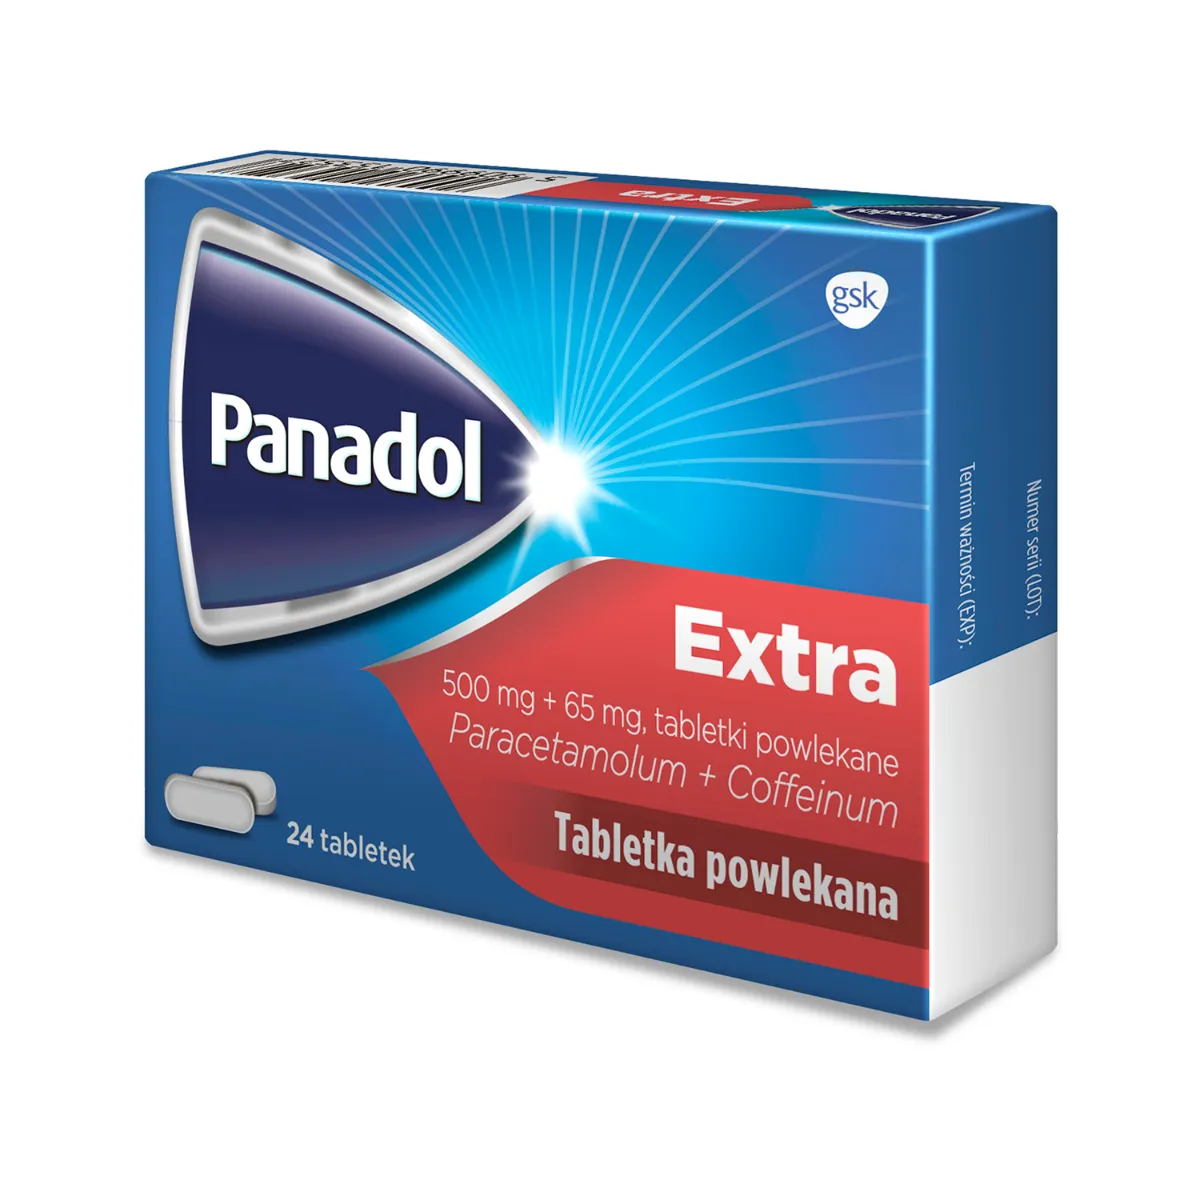 Panadol Extra, 500 mg + 65 mg, 24 tabletki powlekane 